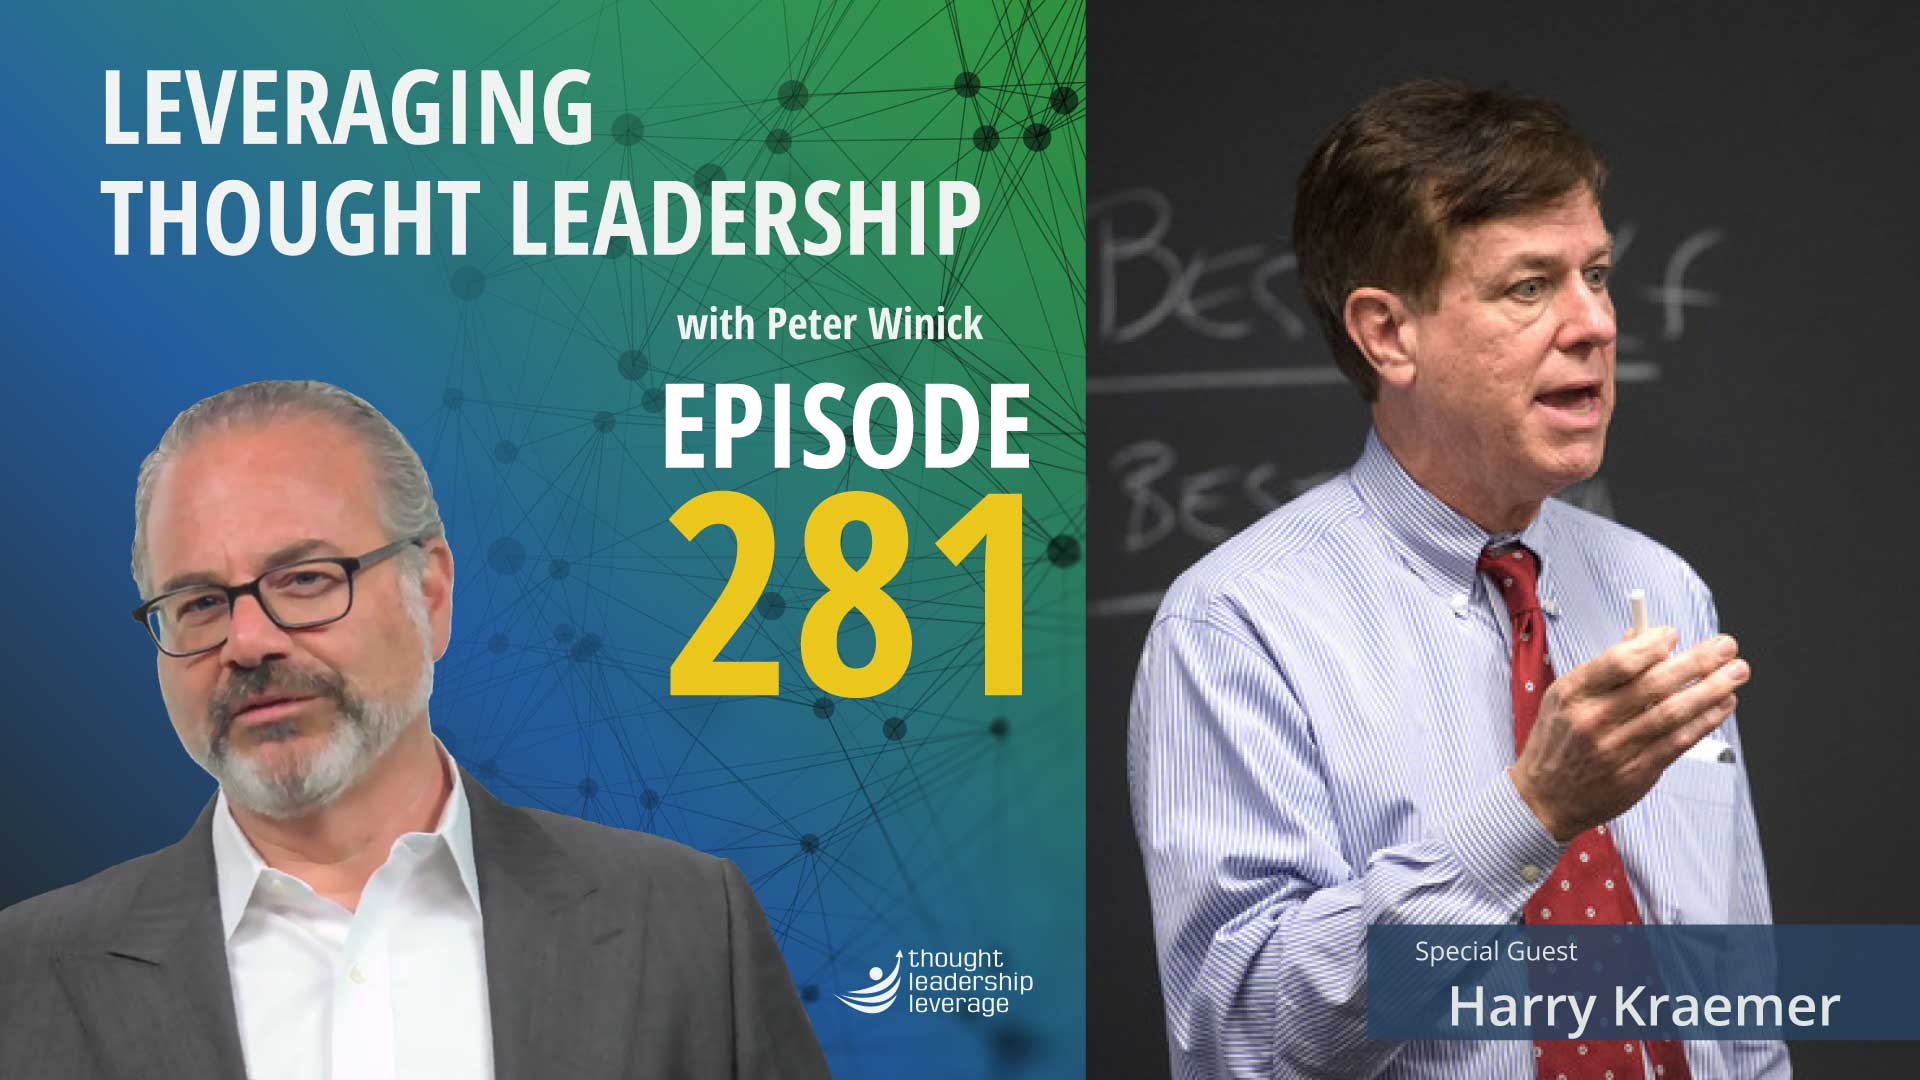 Value-Based Thought Leadership| Harry Kraemer